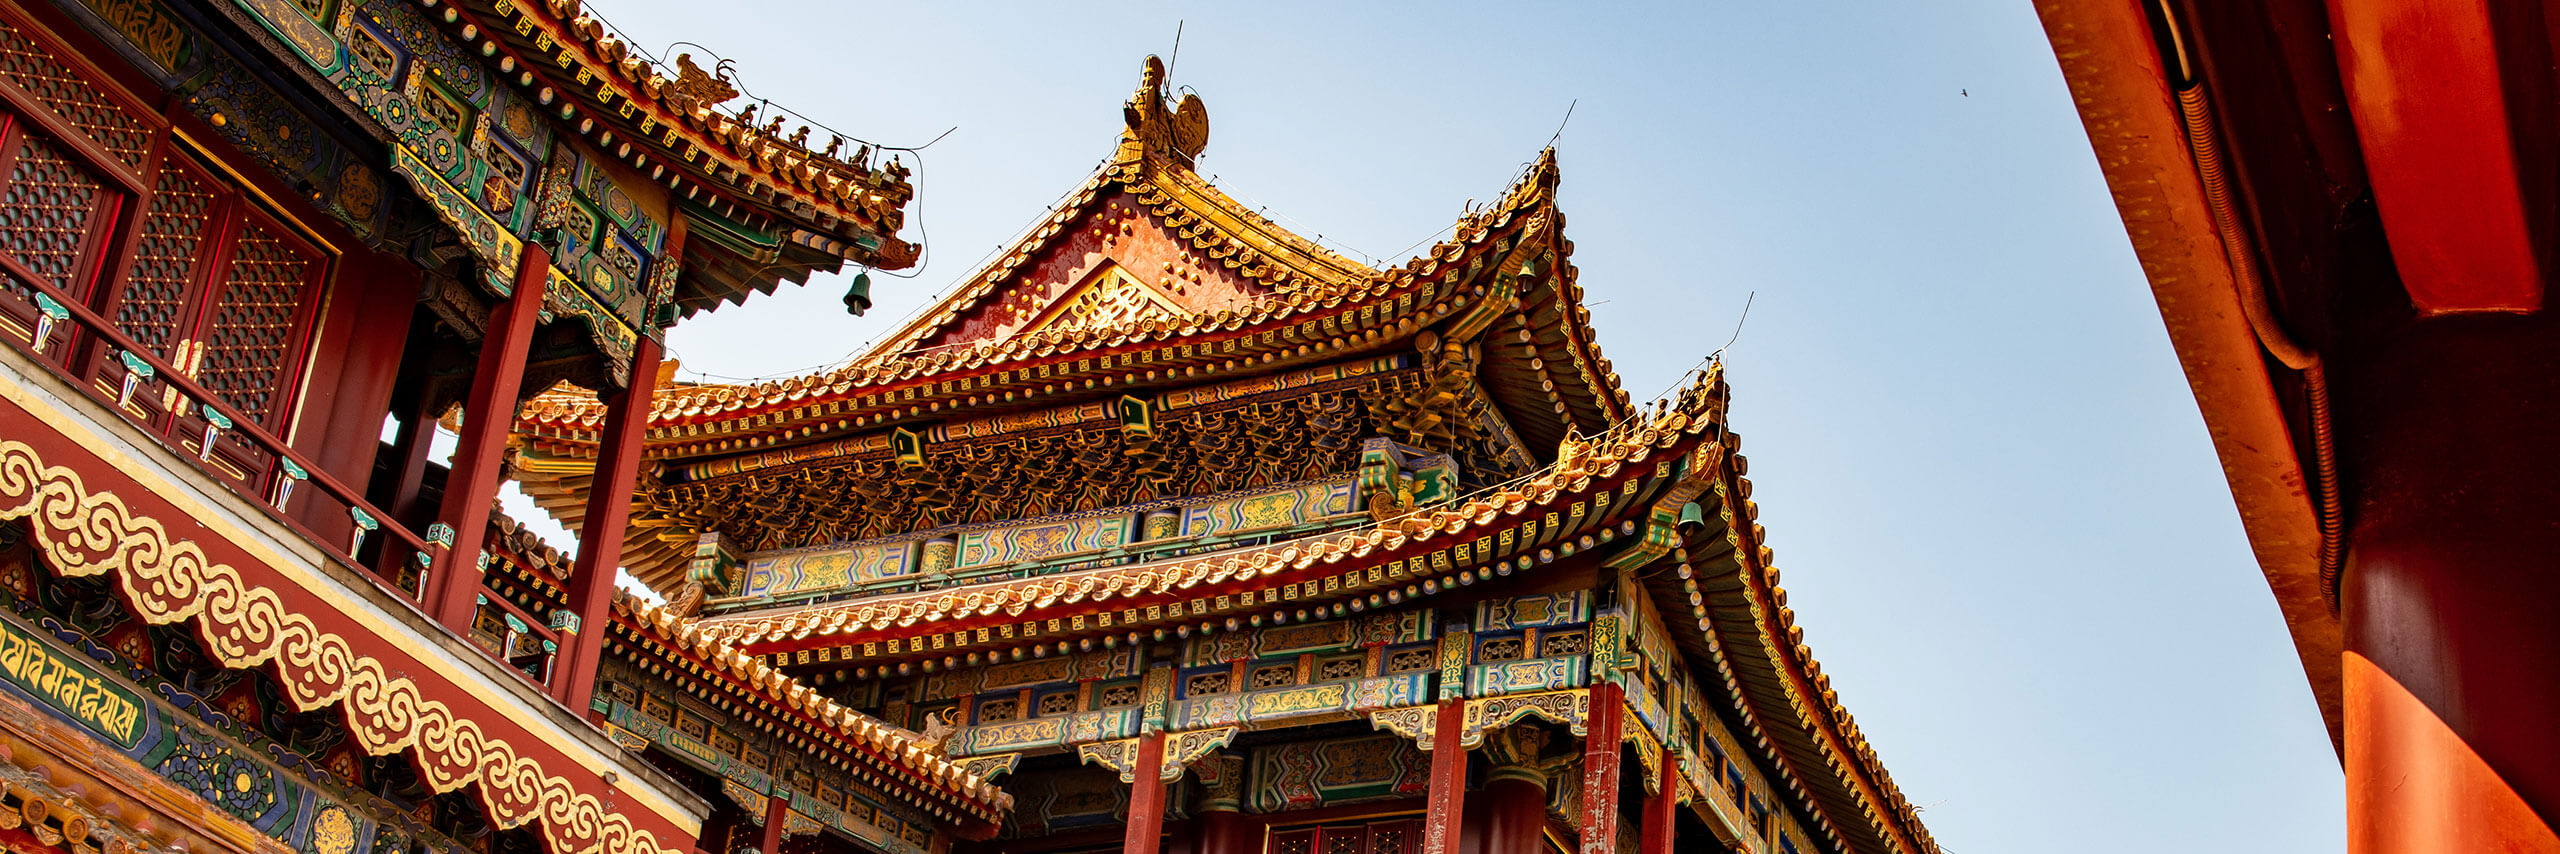 Oriental Temple Roof